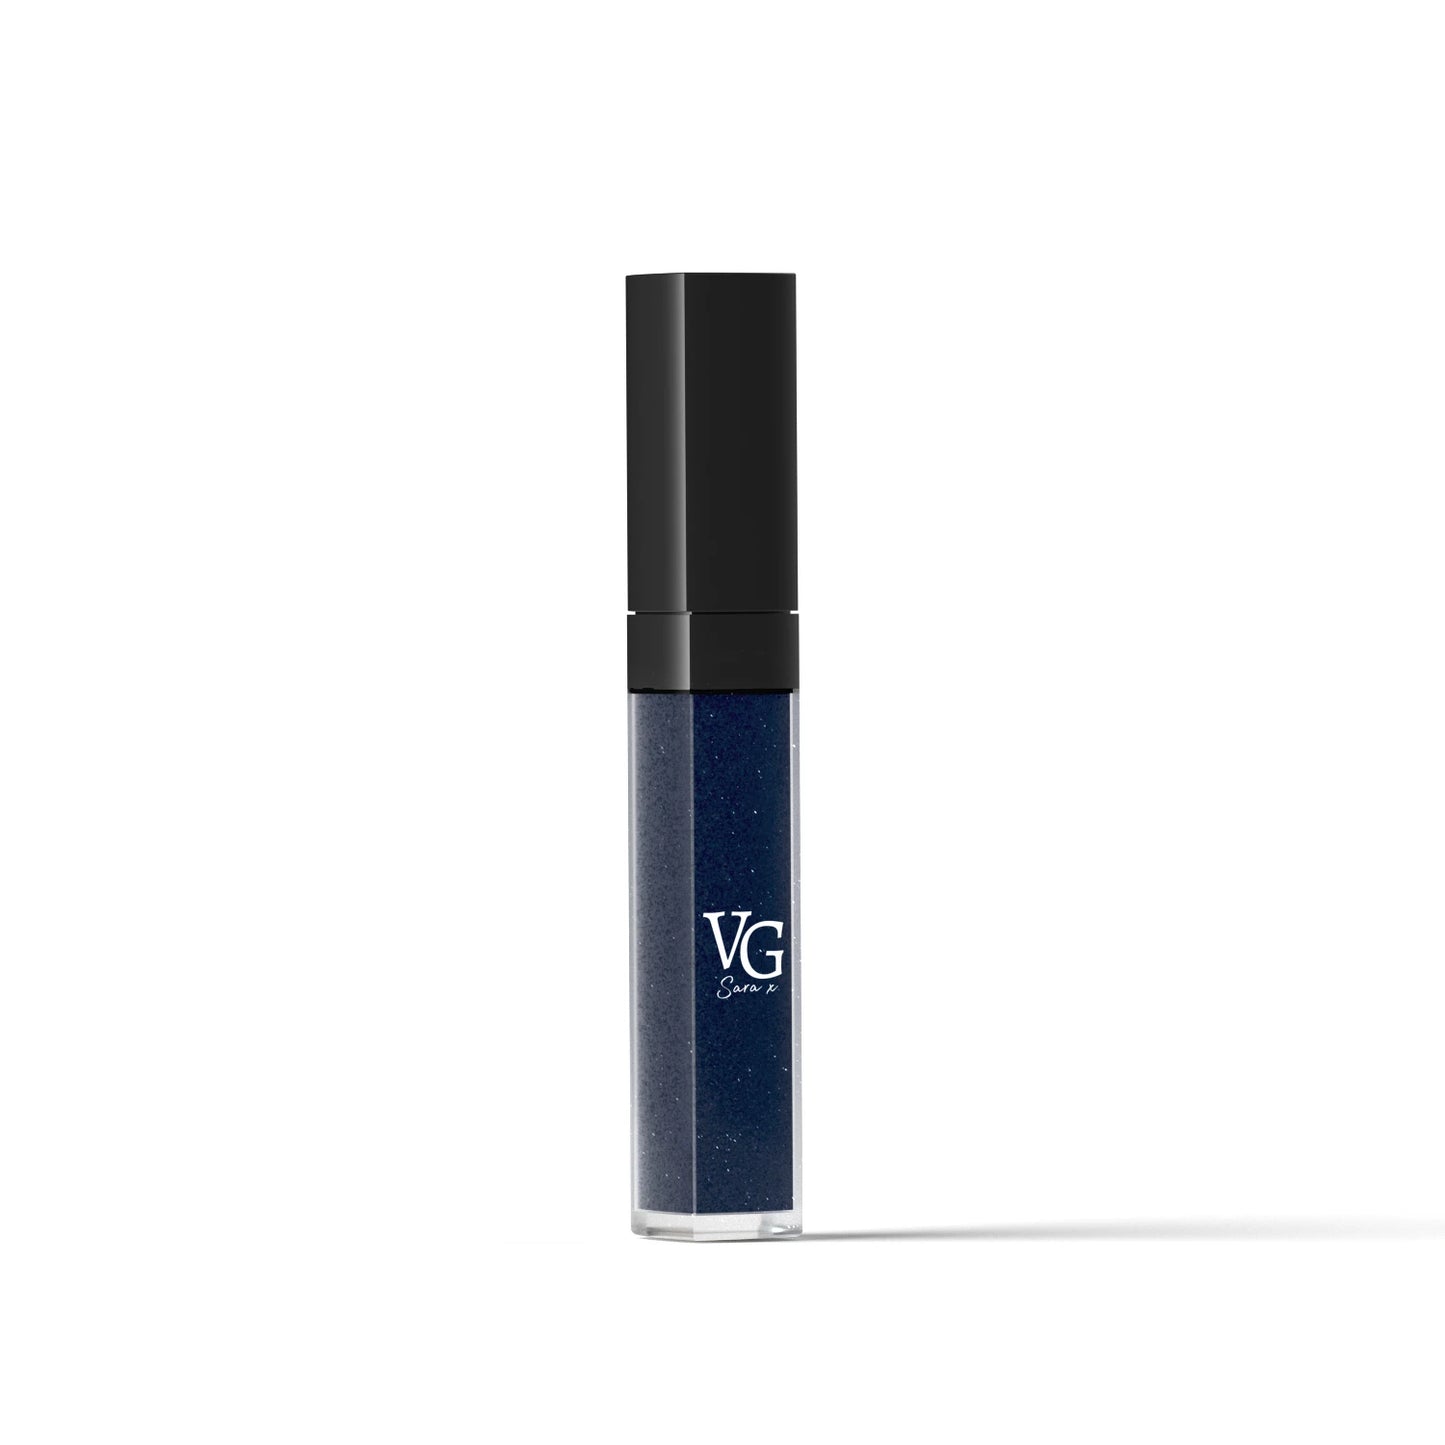 Dark blue vegan lip gloss with cruelty-free formula